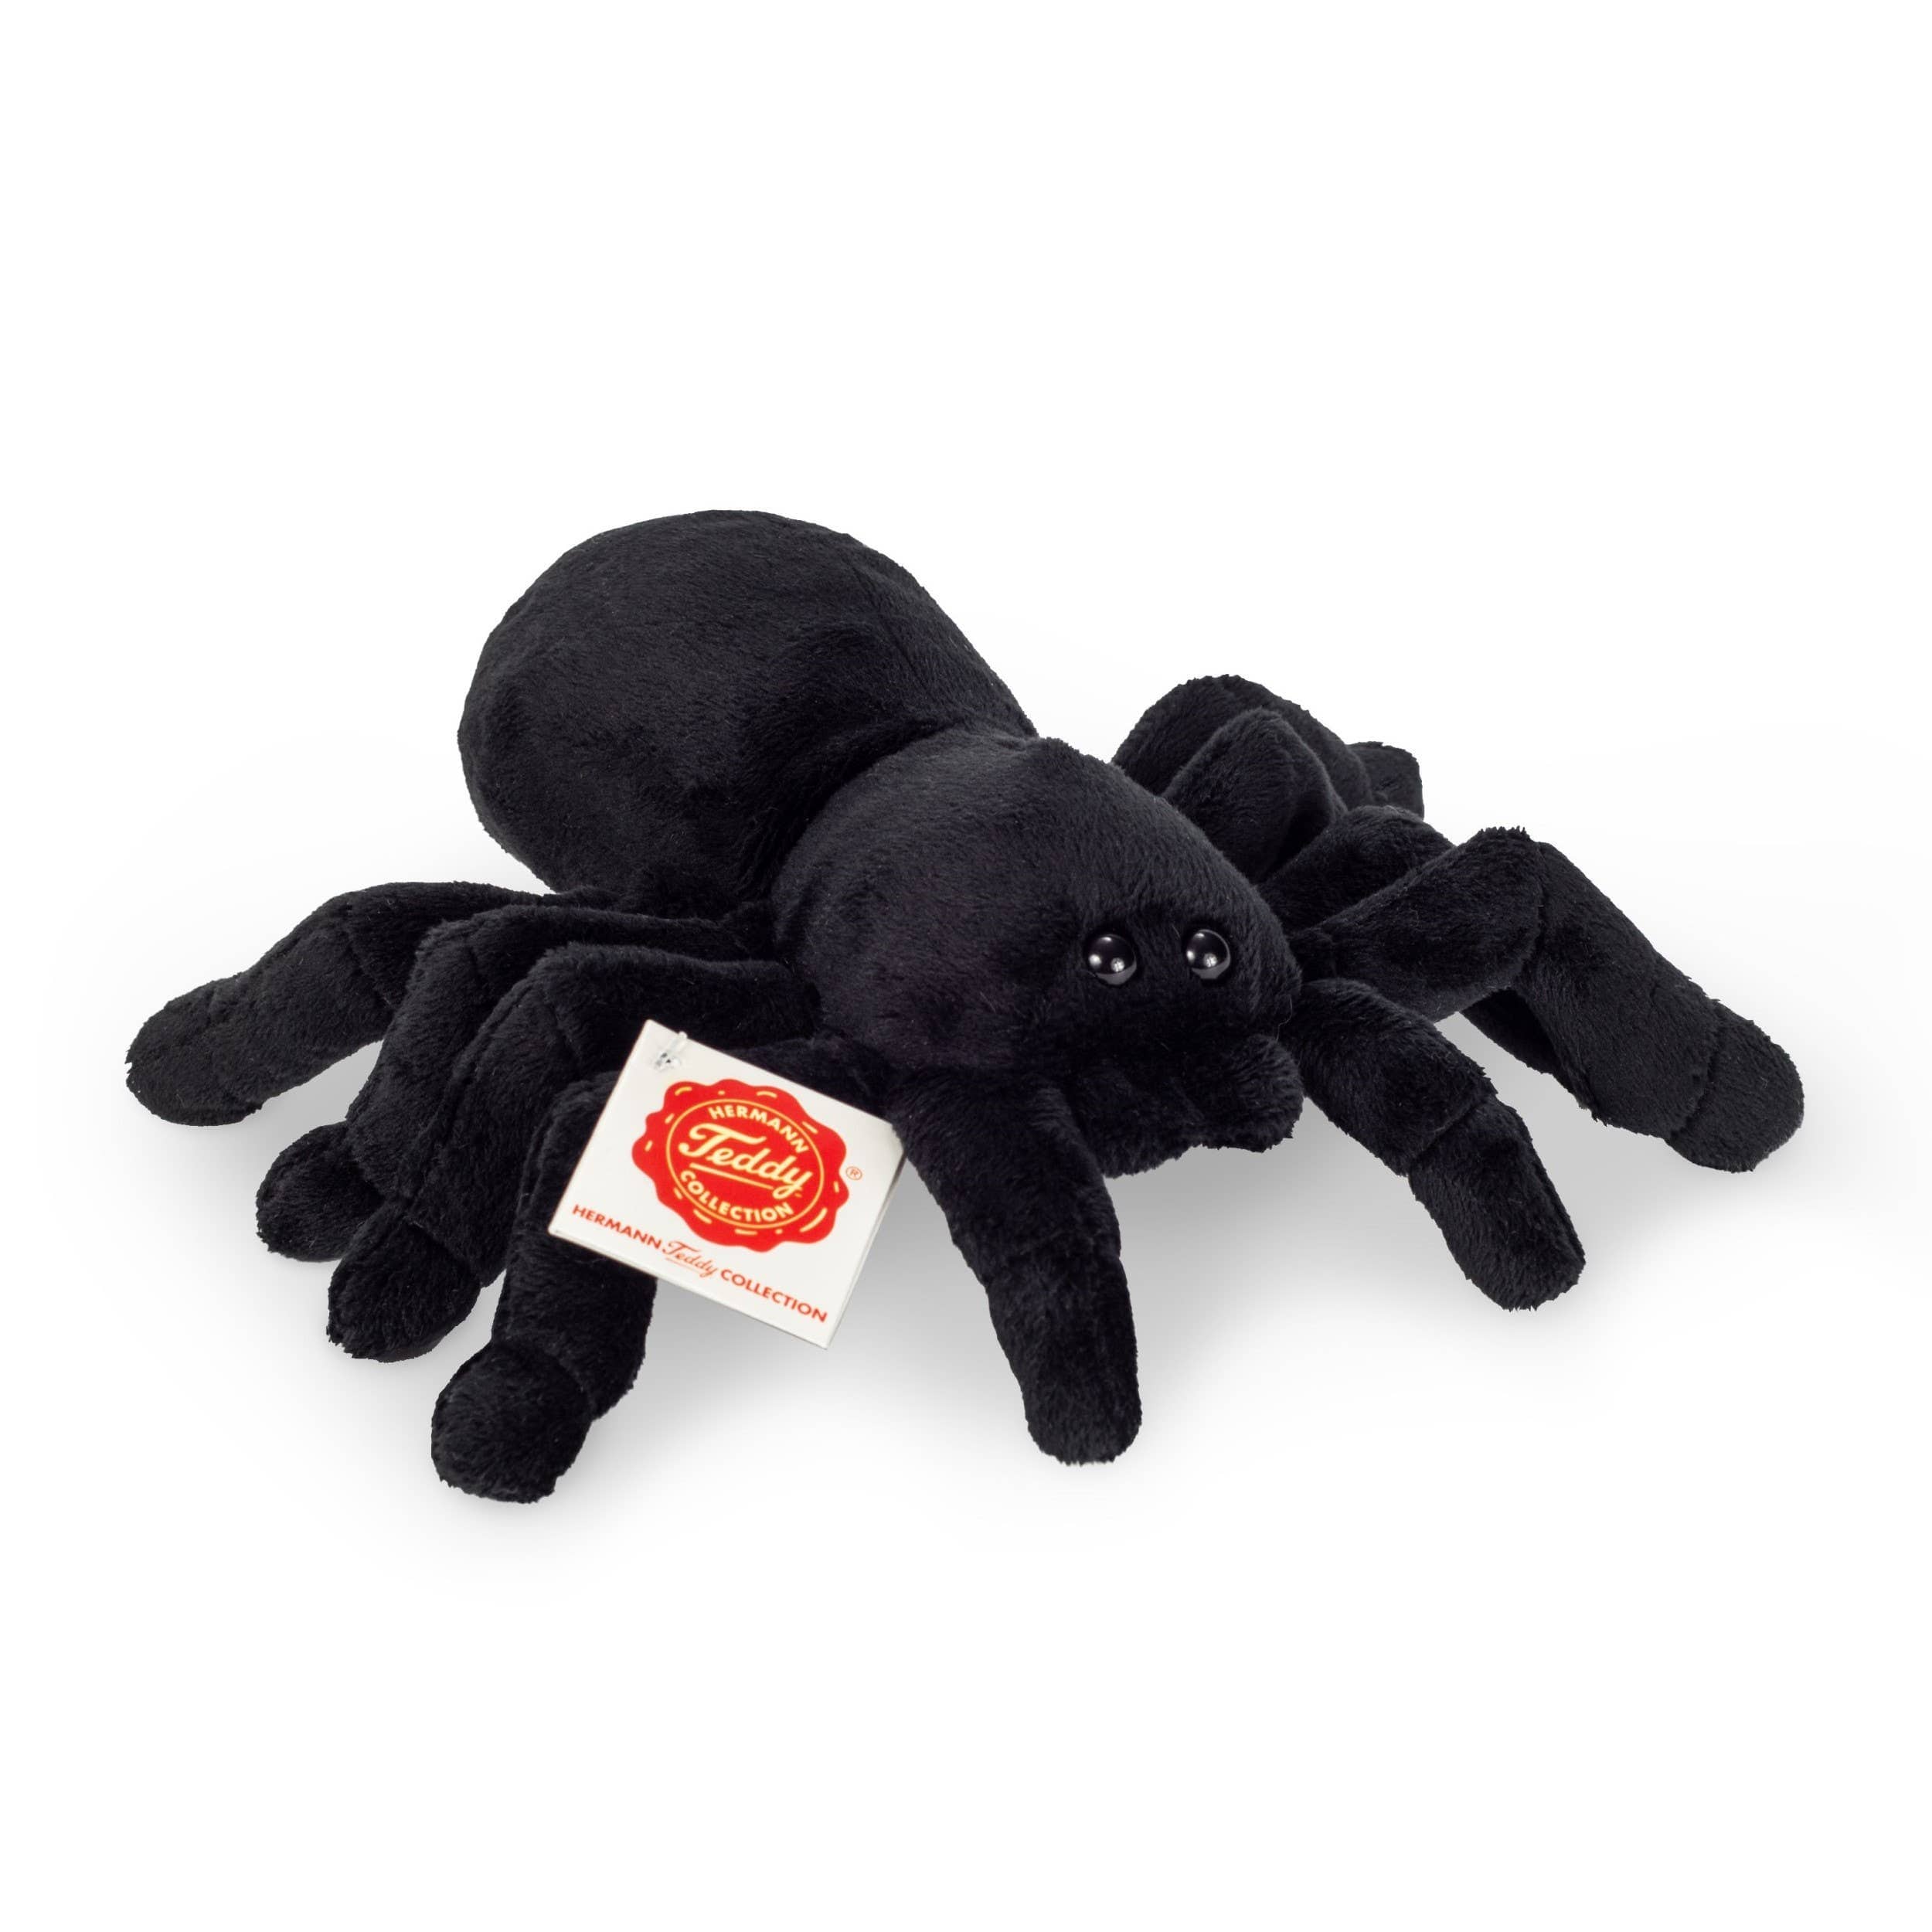 Black Fuzzy Realistic Spider 16 cm - Teddy Hermann Plush Toys